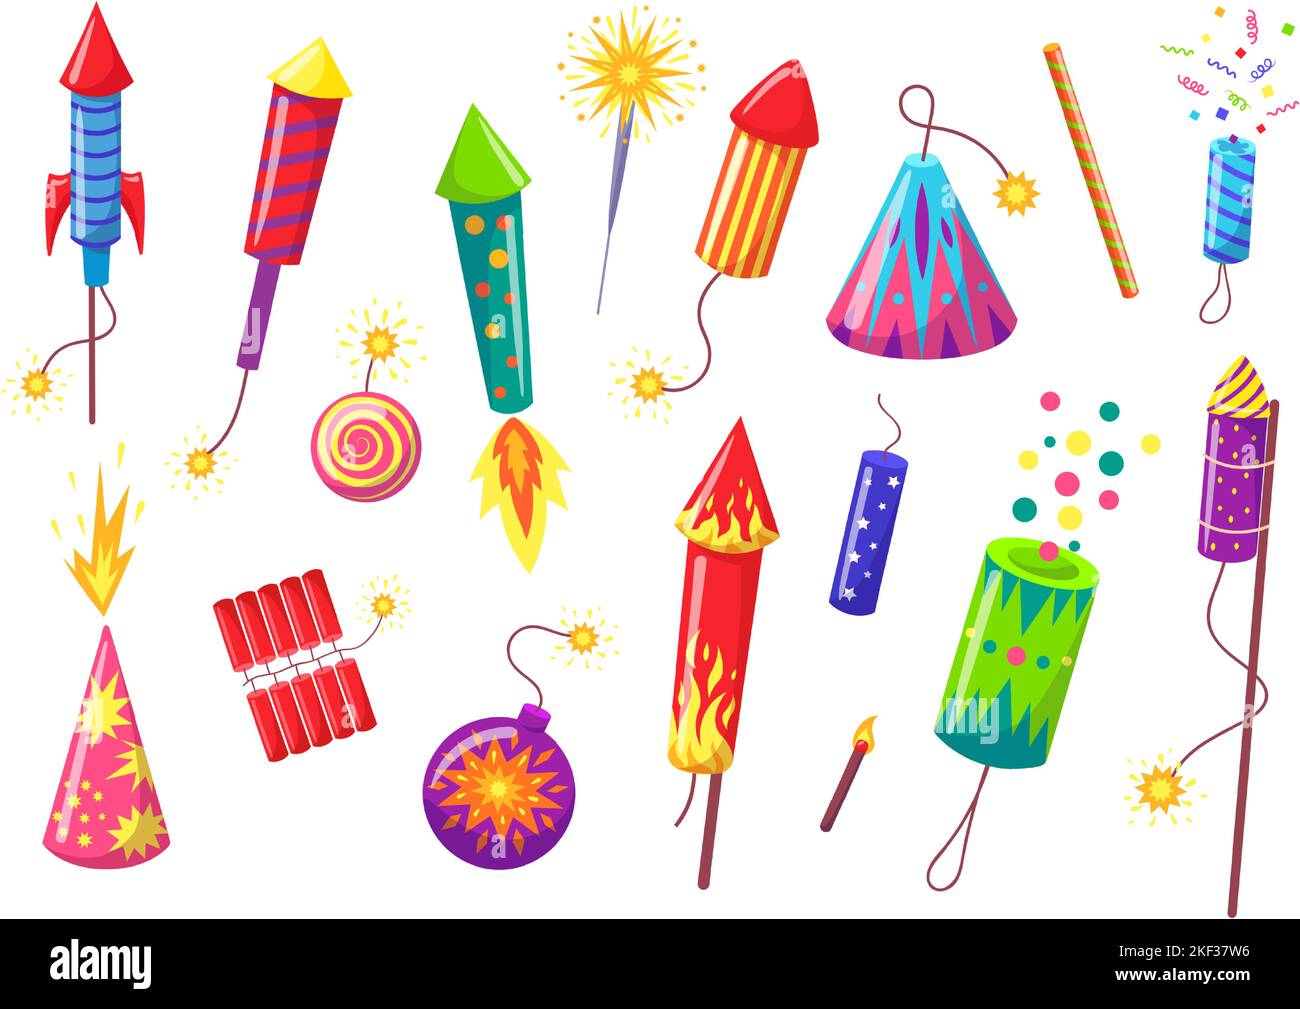 Cartoon holiday pyrotechnics. Festive petards, pyrotechnic fireworks rockets and firecrackers. Holiday decorative bombs vector set Stock Vector